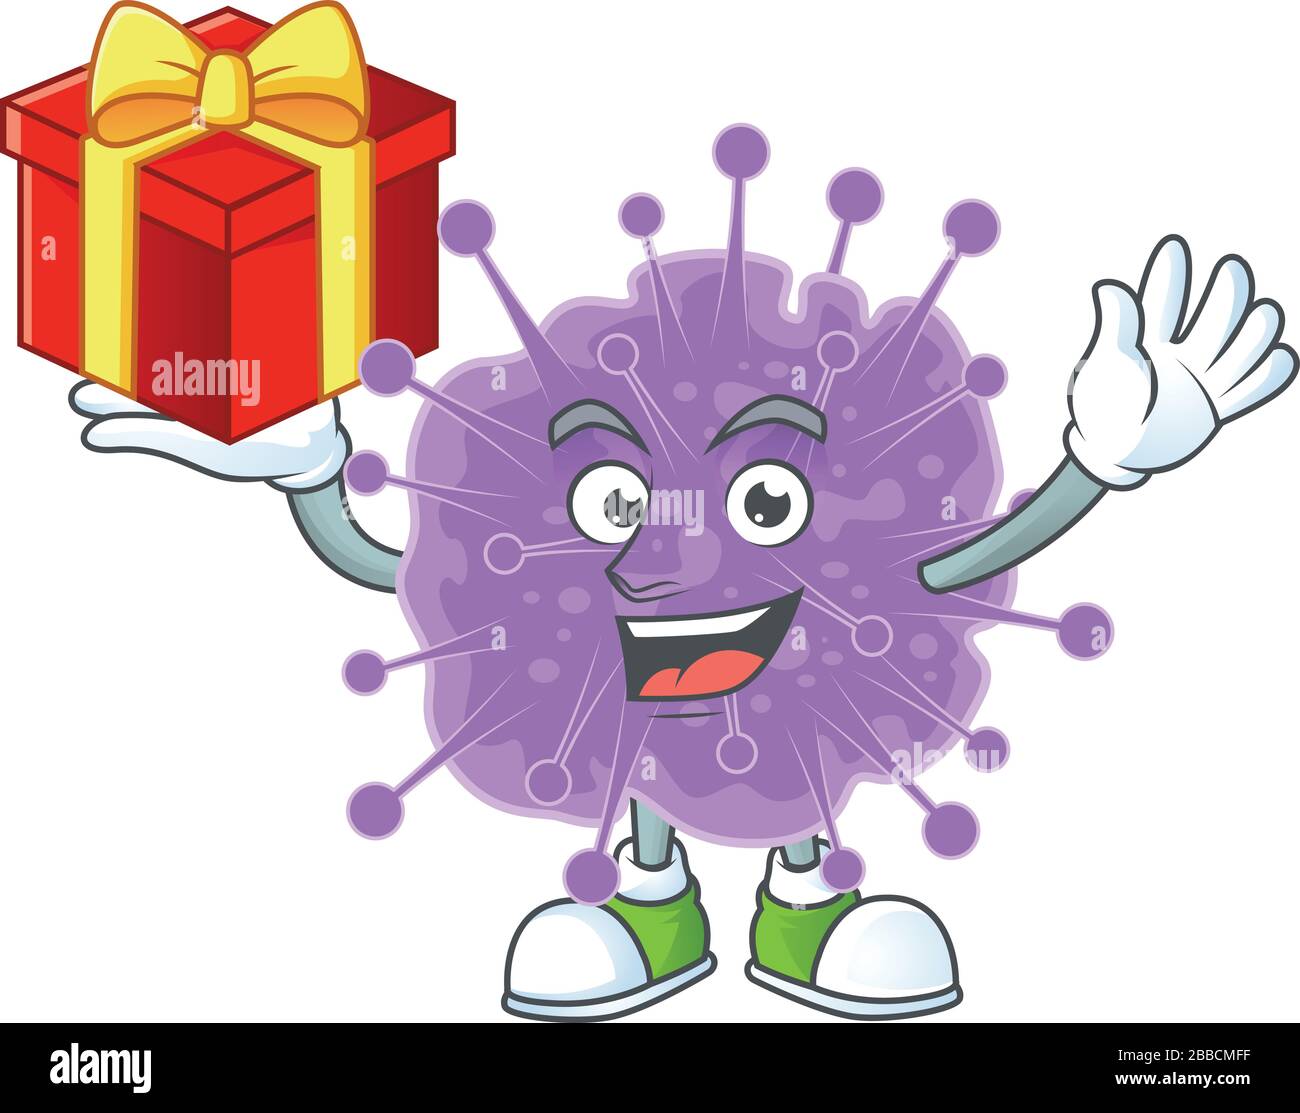 A mascot design style of coronavirus influenza showing crazy face Stock Vector